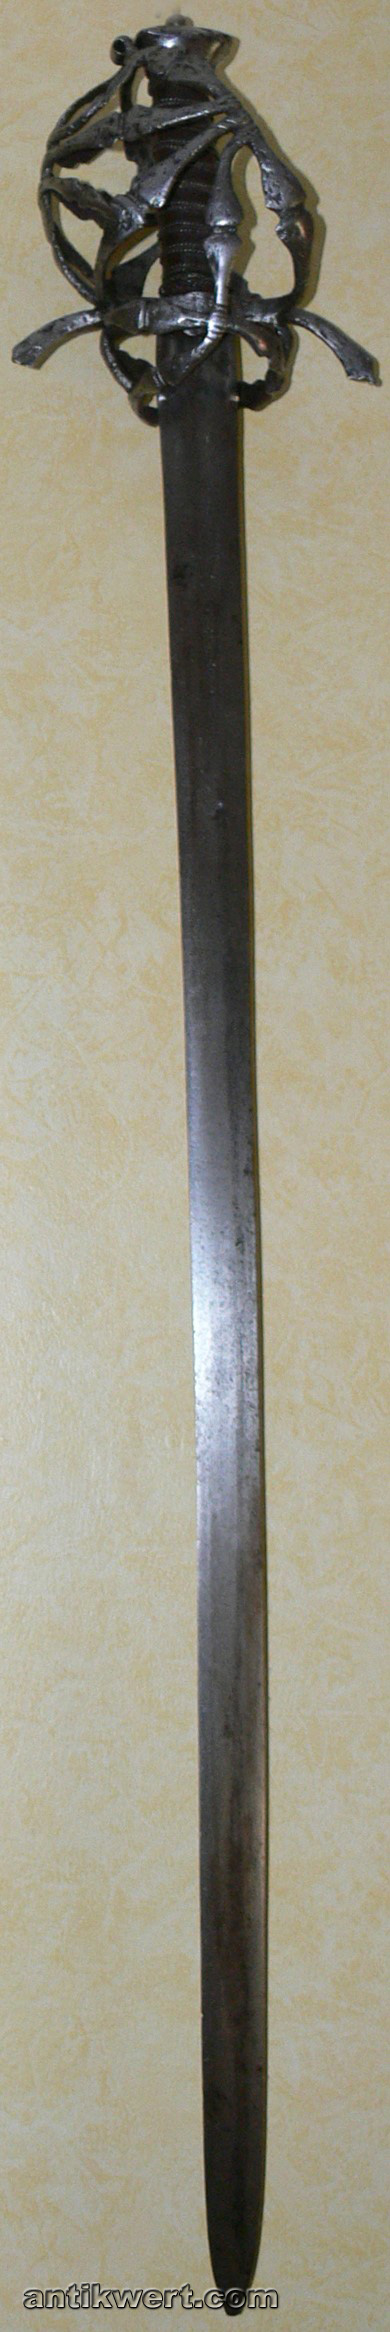 Korb-Schwert-611 Terzseite